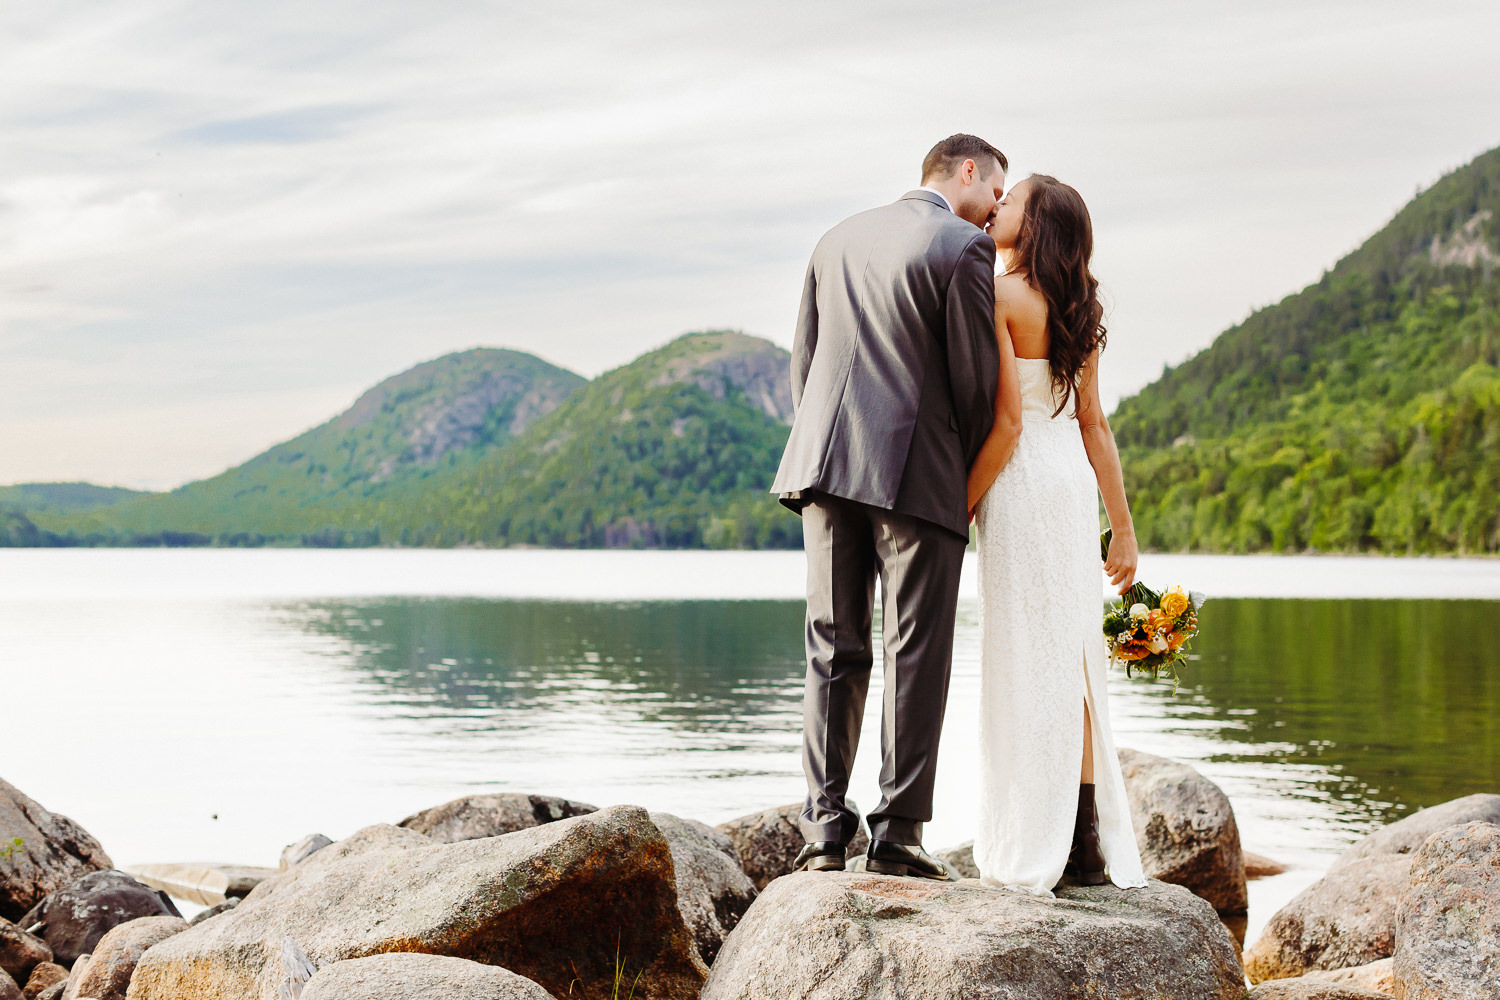 Bride and groom pose for a wedding portrait at Jordan Pond in Acadia National Park.